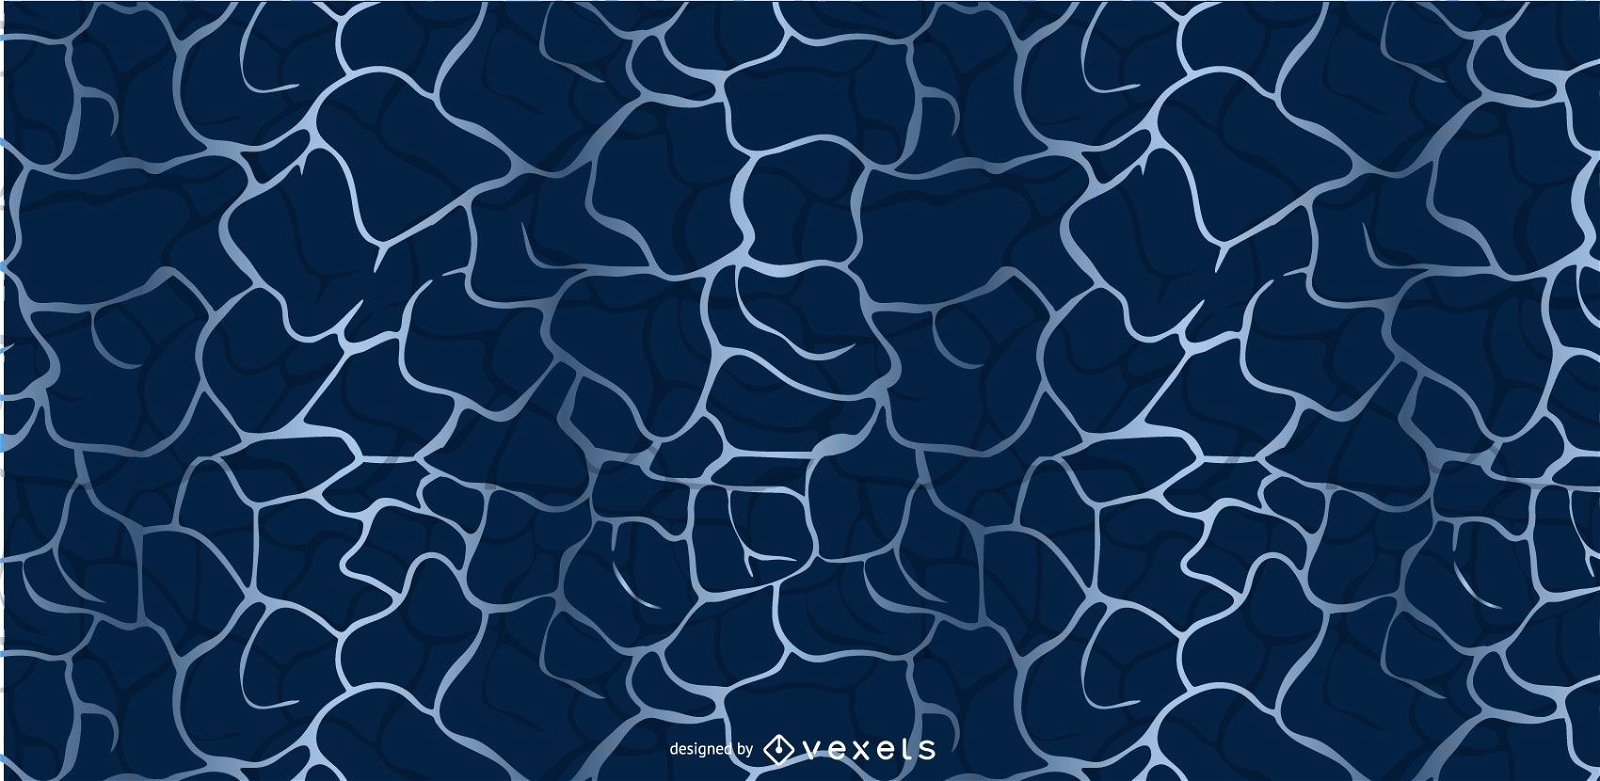 Deep blue sea pattern design